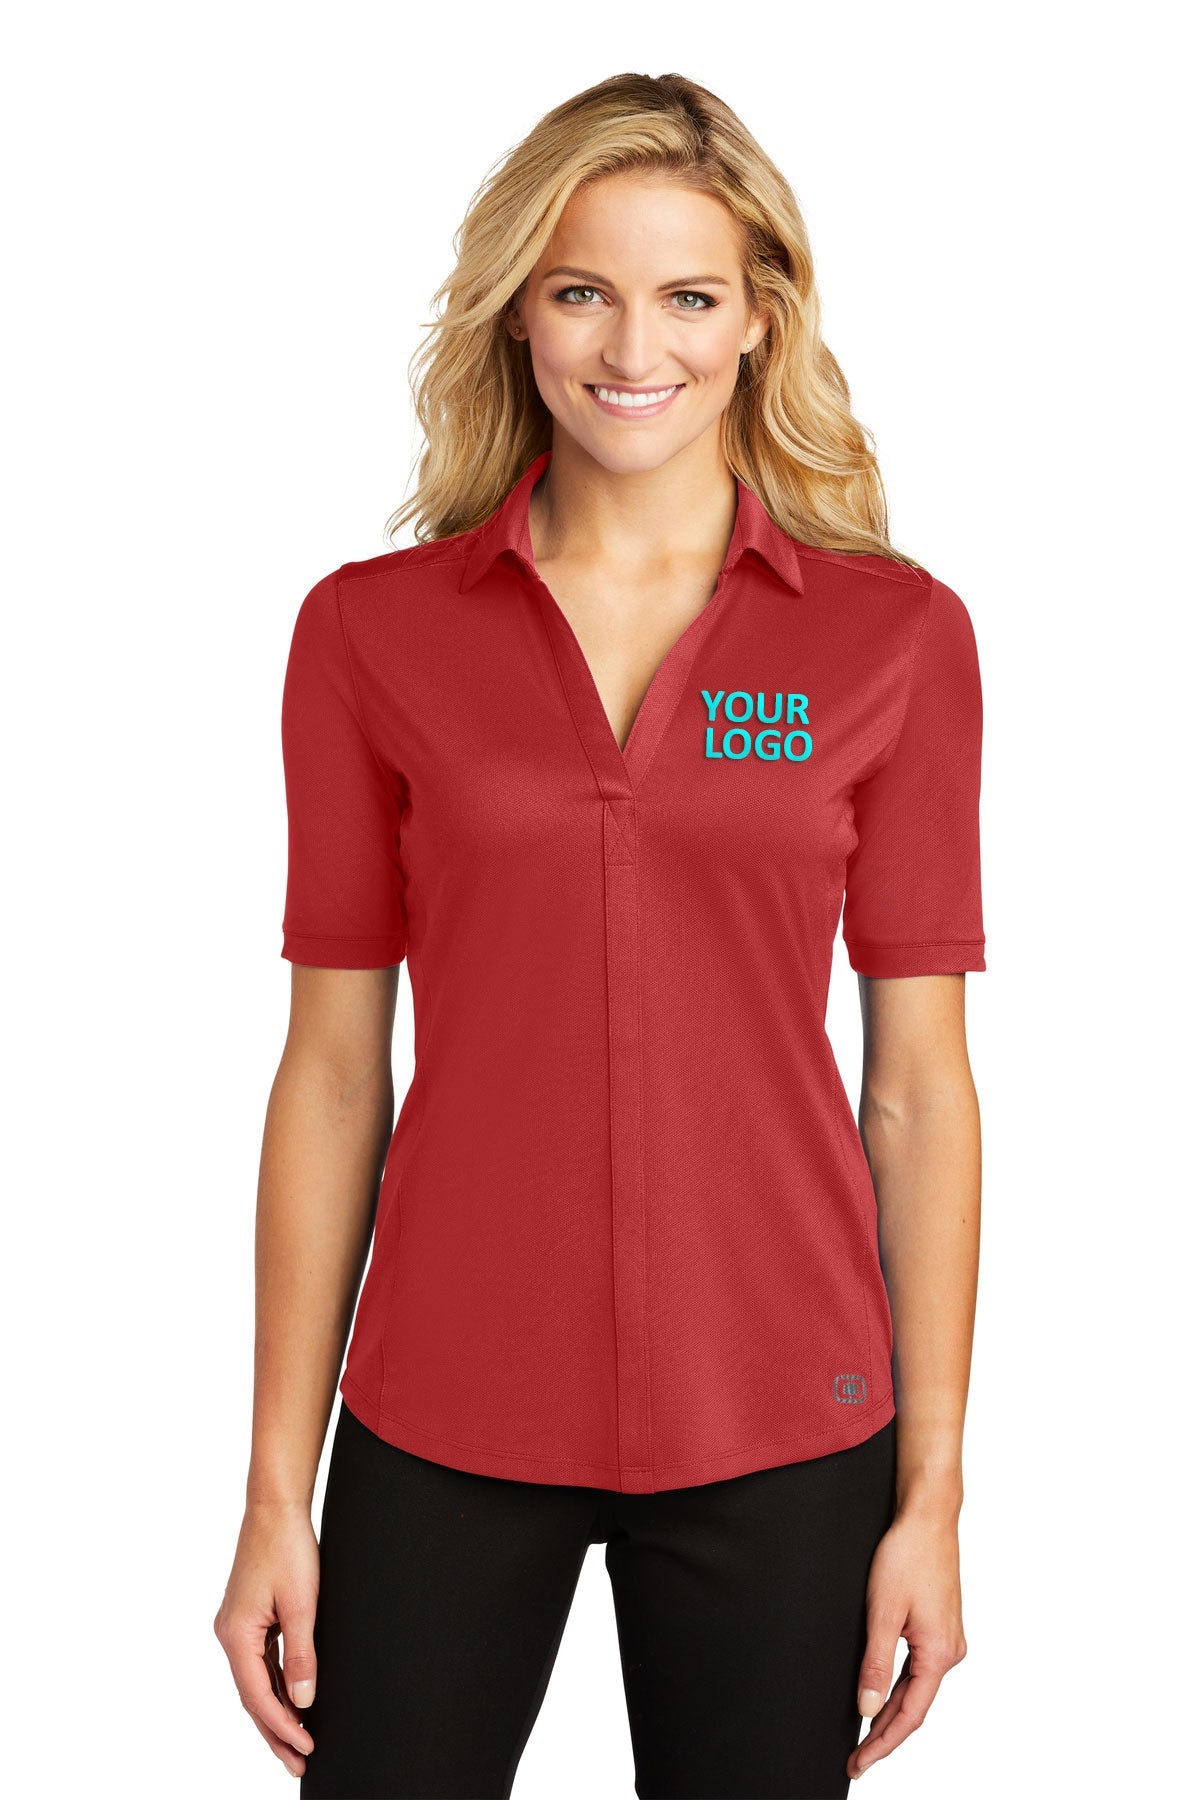 OGIO Ripped Red LOG130 polo shirts company logos